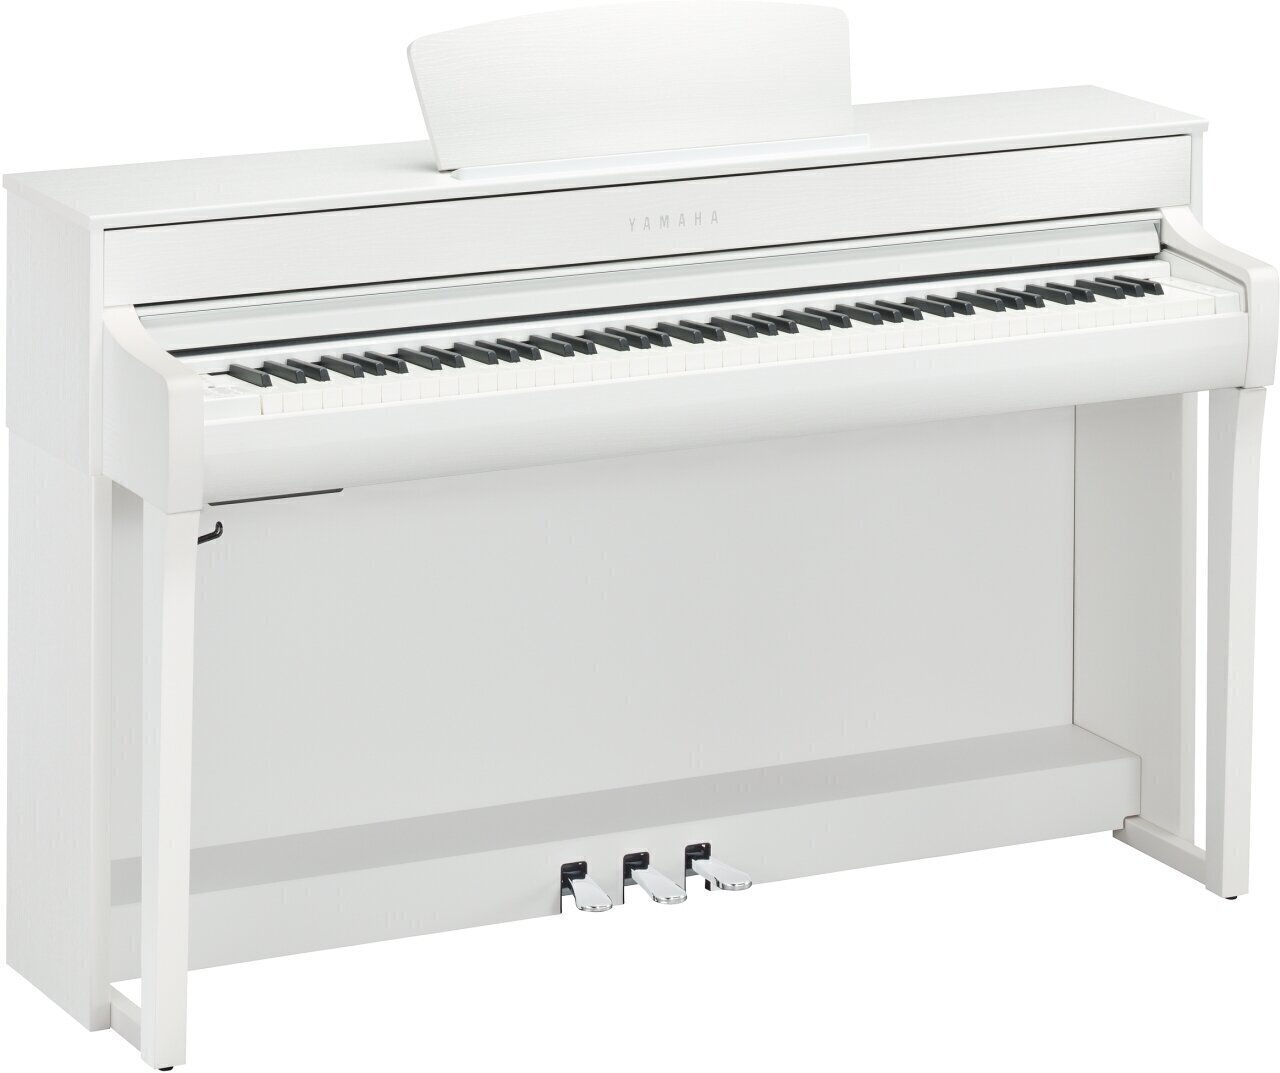 Digital Piano Yamaha CLP 735 White Digital Piano